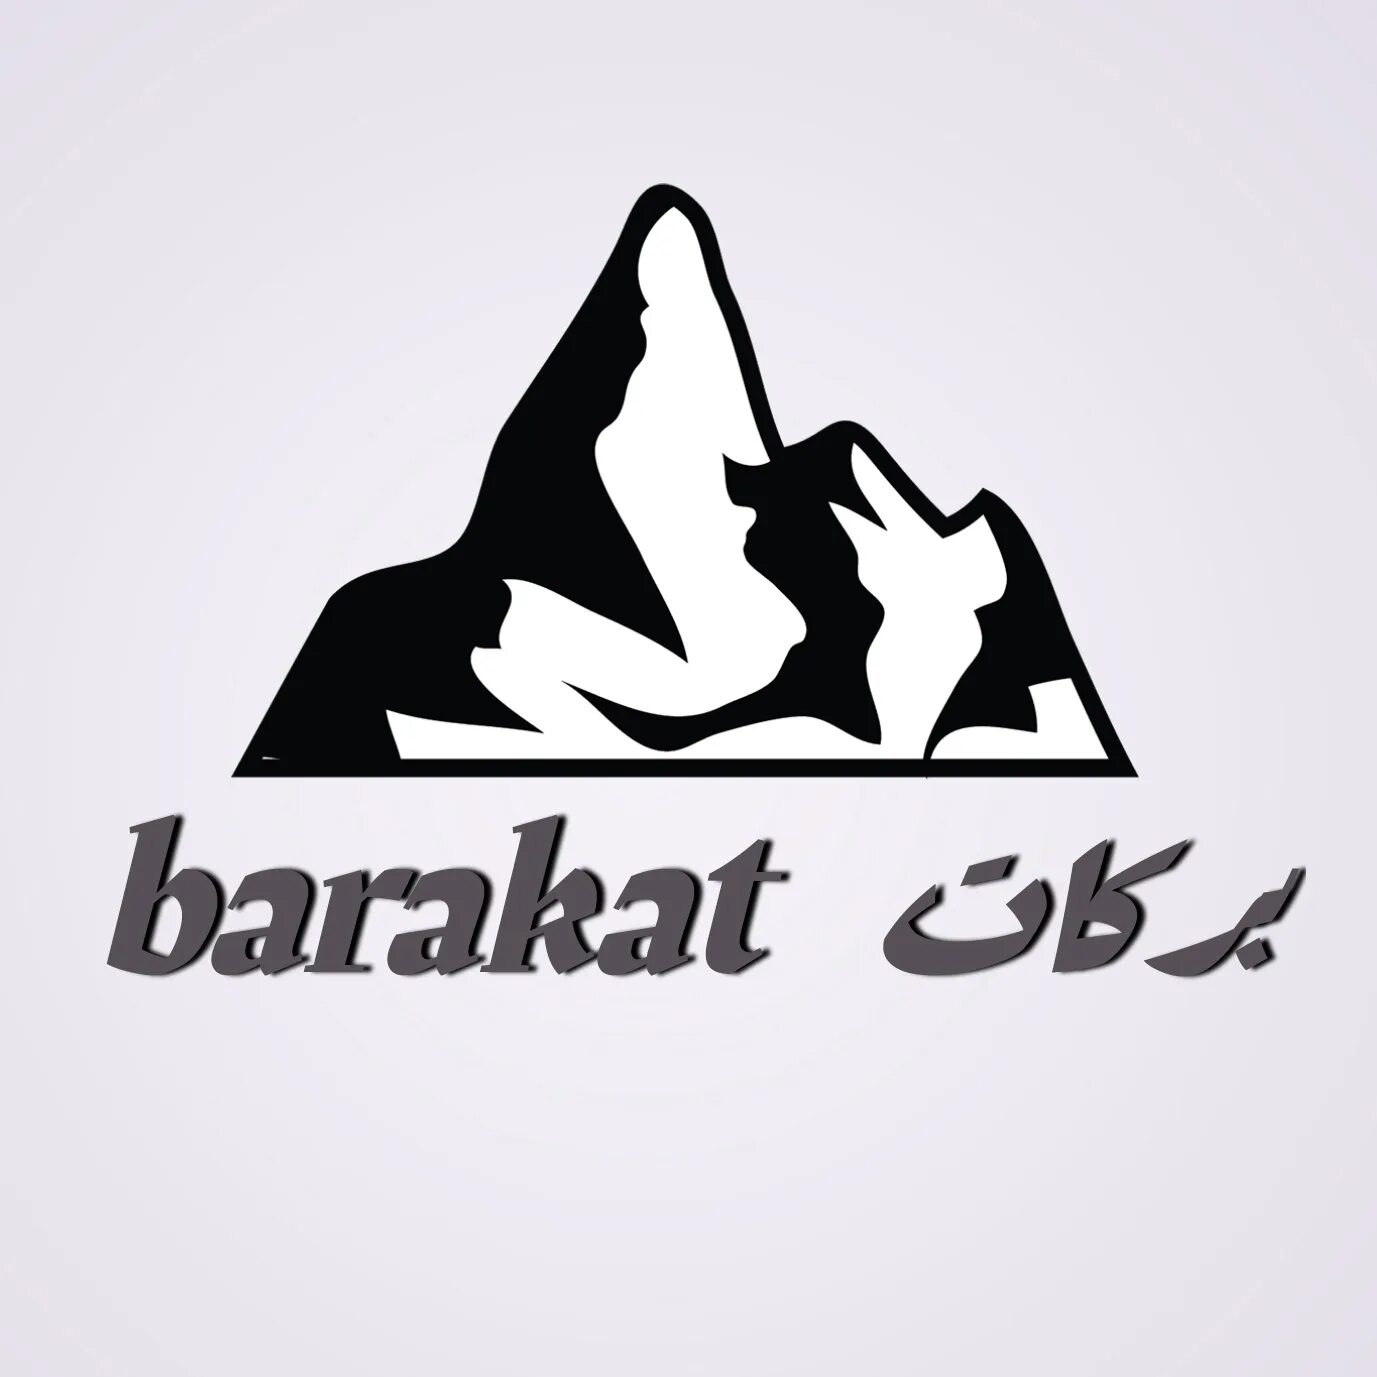 Баракат интернет. Barakat. Barakat картинки. Аль Баракат лого. Кафе Баракат эмблема логотип.